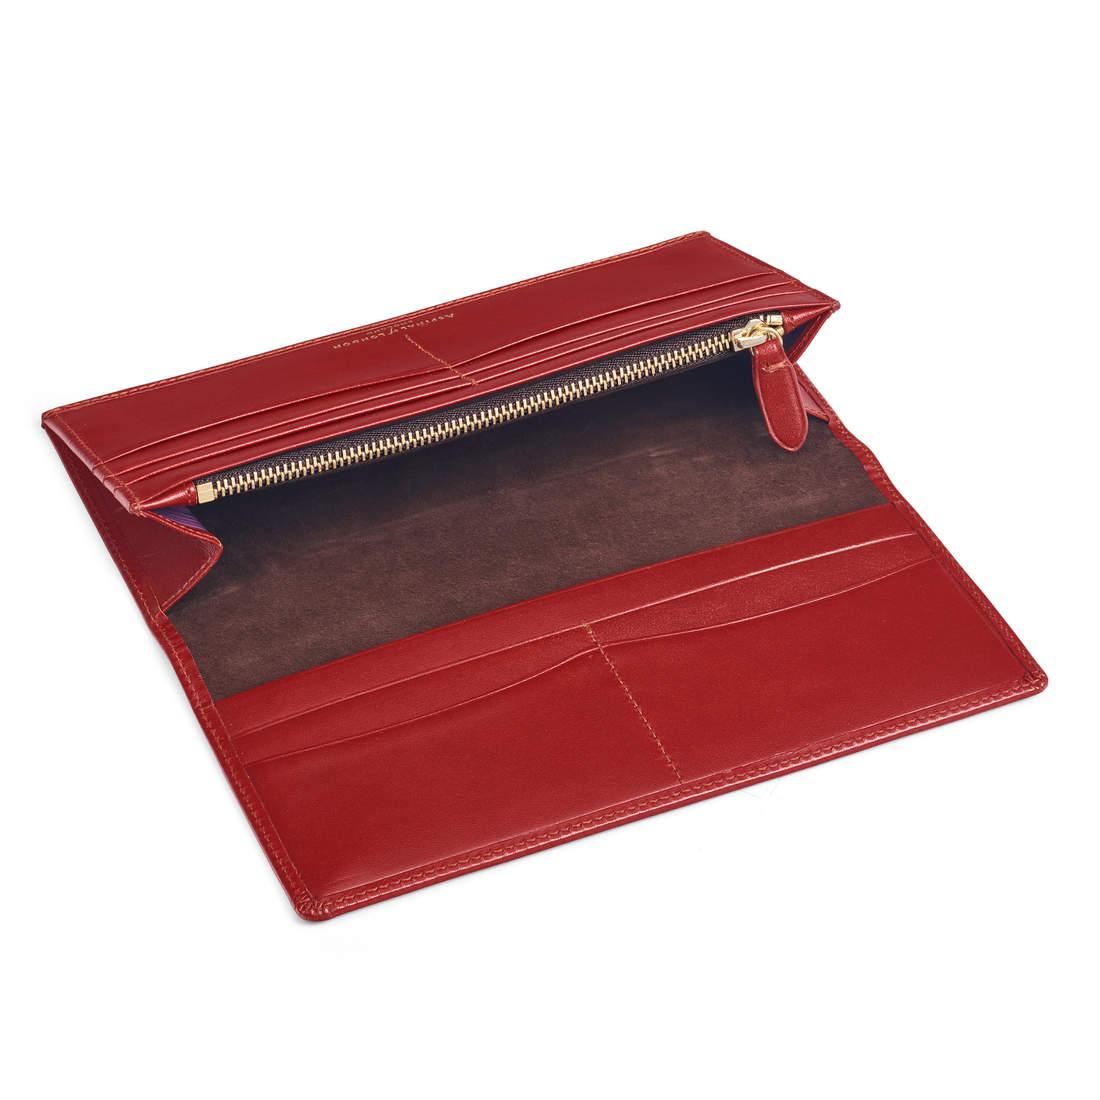 Aspinal of London 10 Card Slim Coat Wallet in Cognac (Red) - Lyst